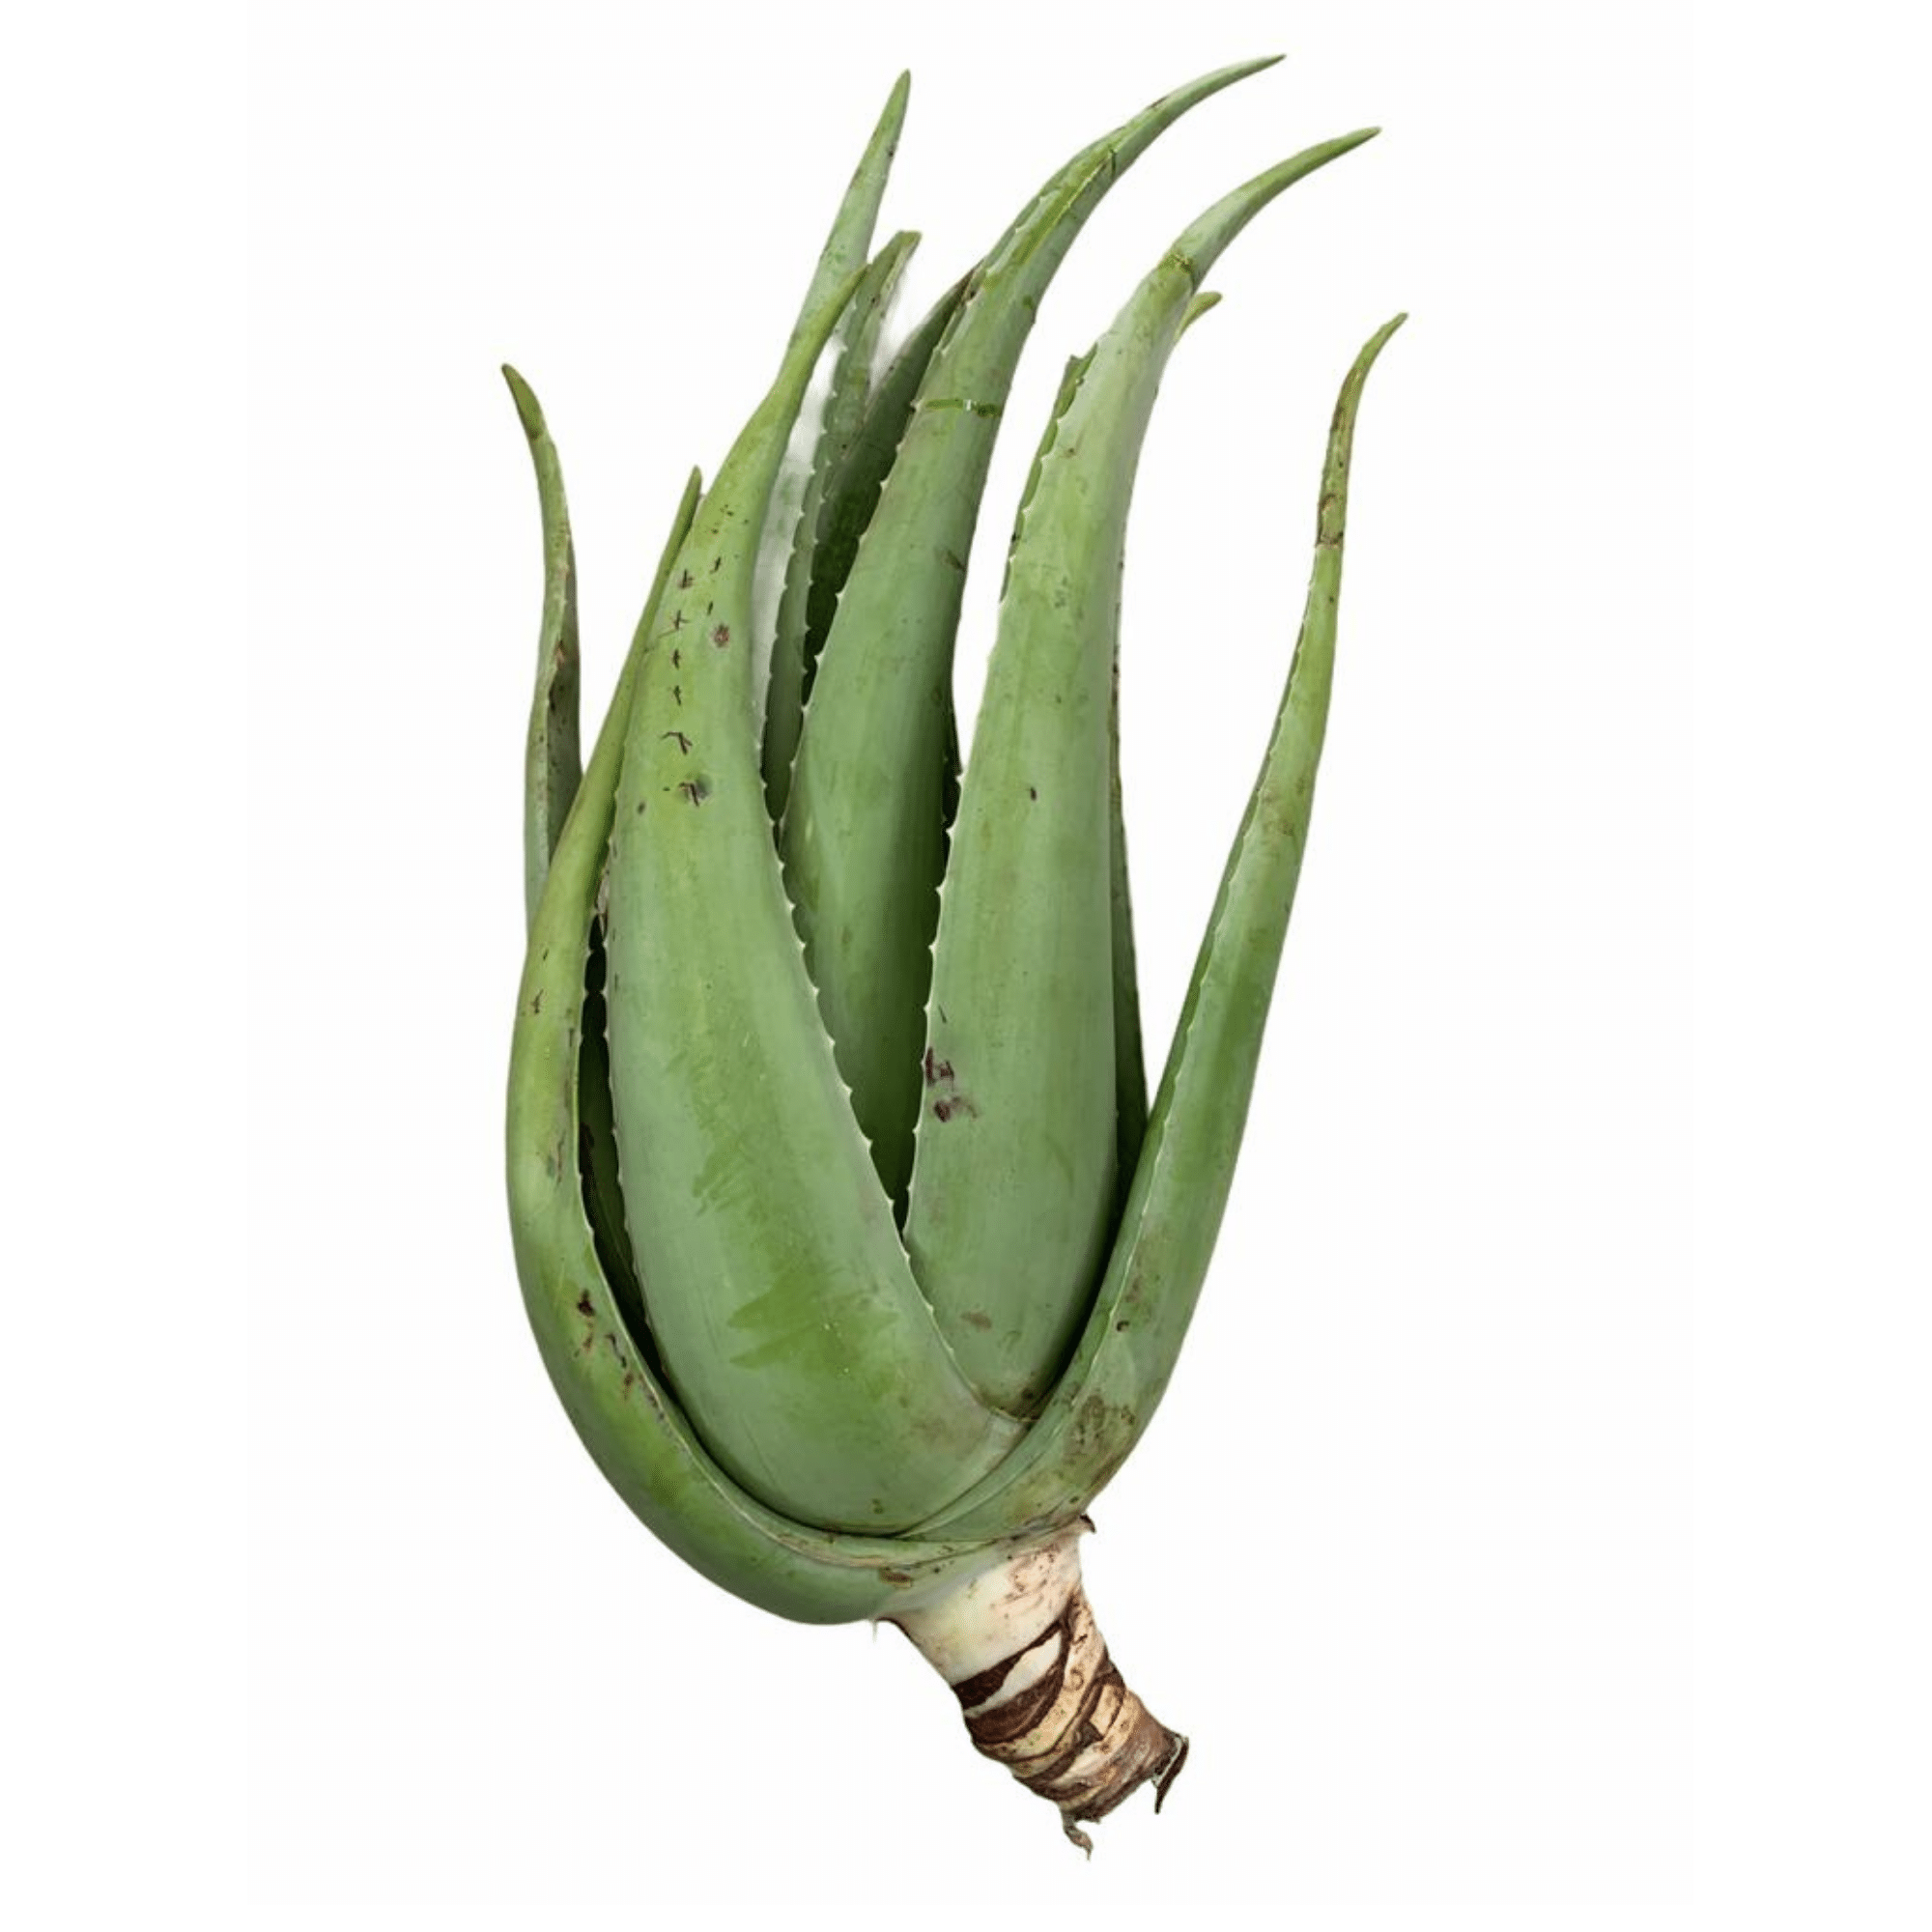 manipuleren omringen vaak Adult Aloe Vera Plant - Organic Certified - VonDerWeid